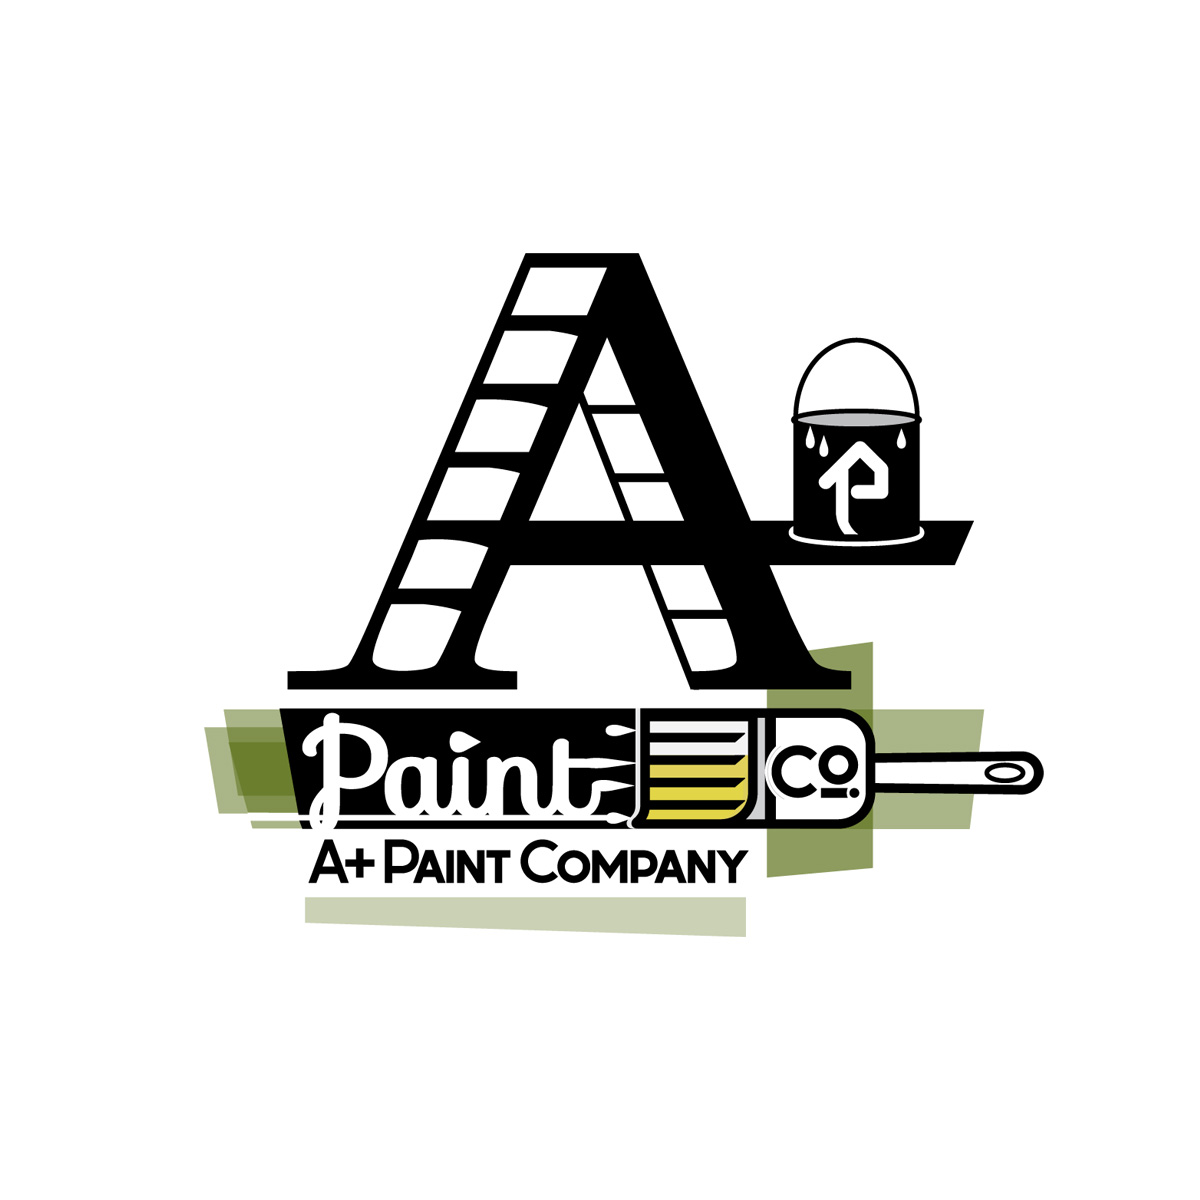 A-Plus Painting company typographic logo